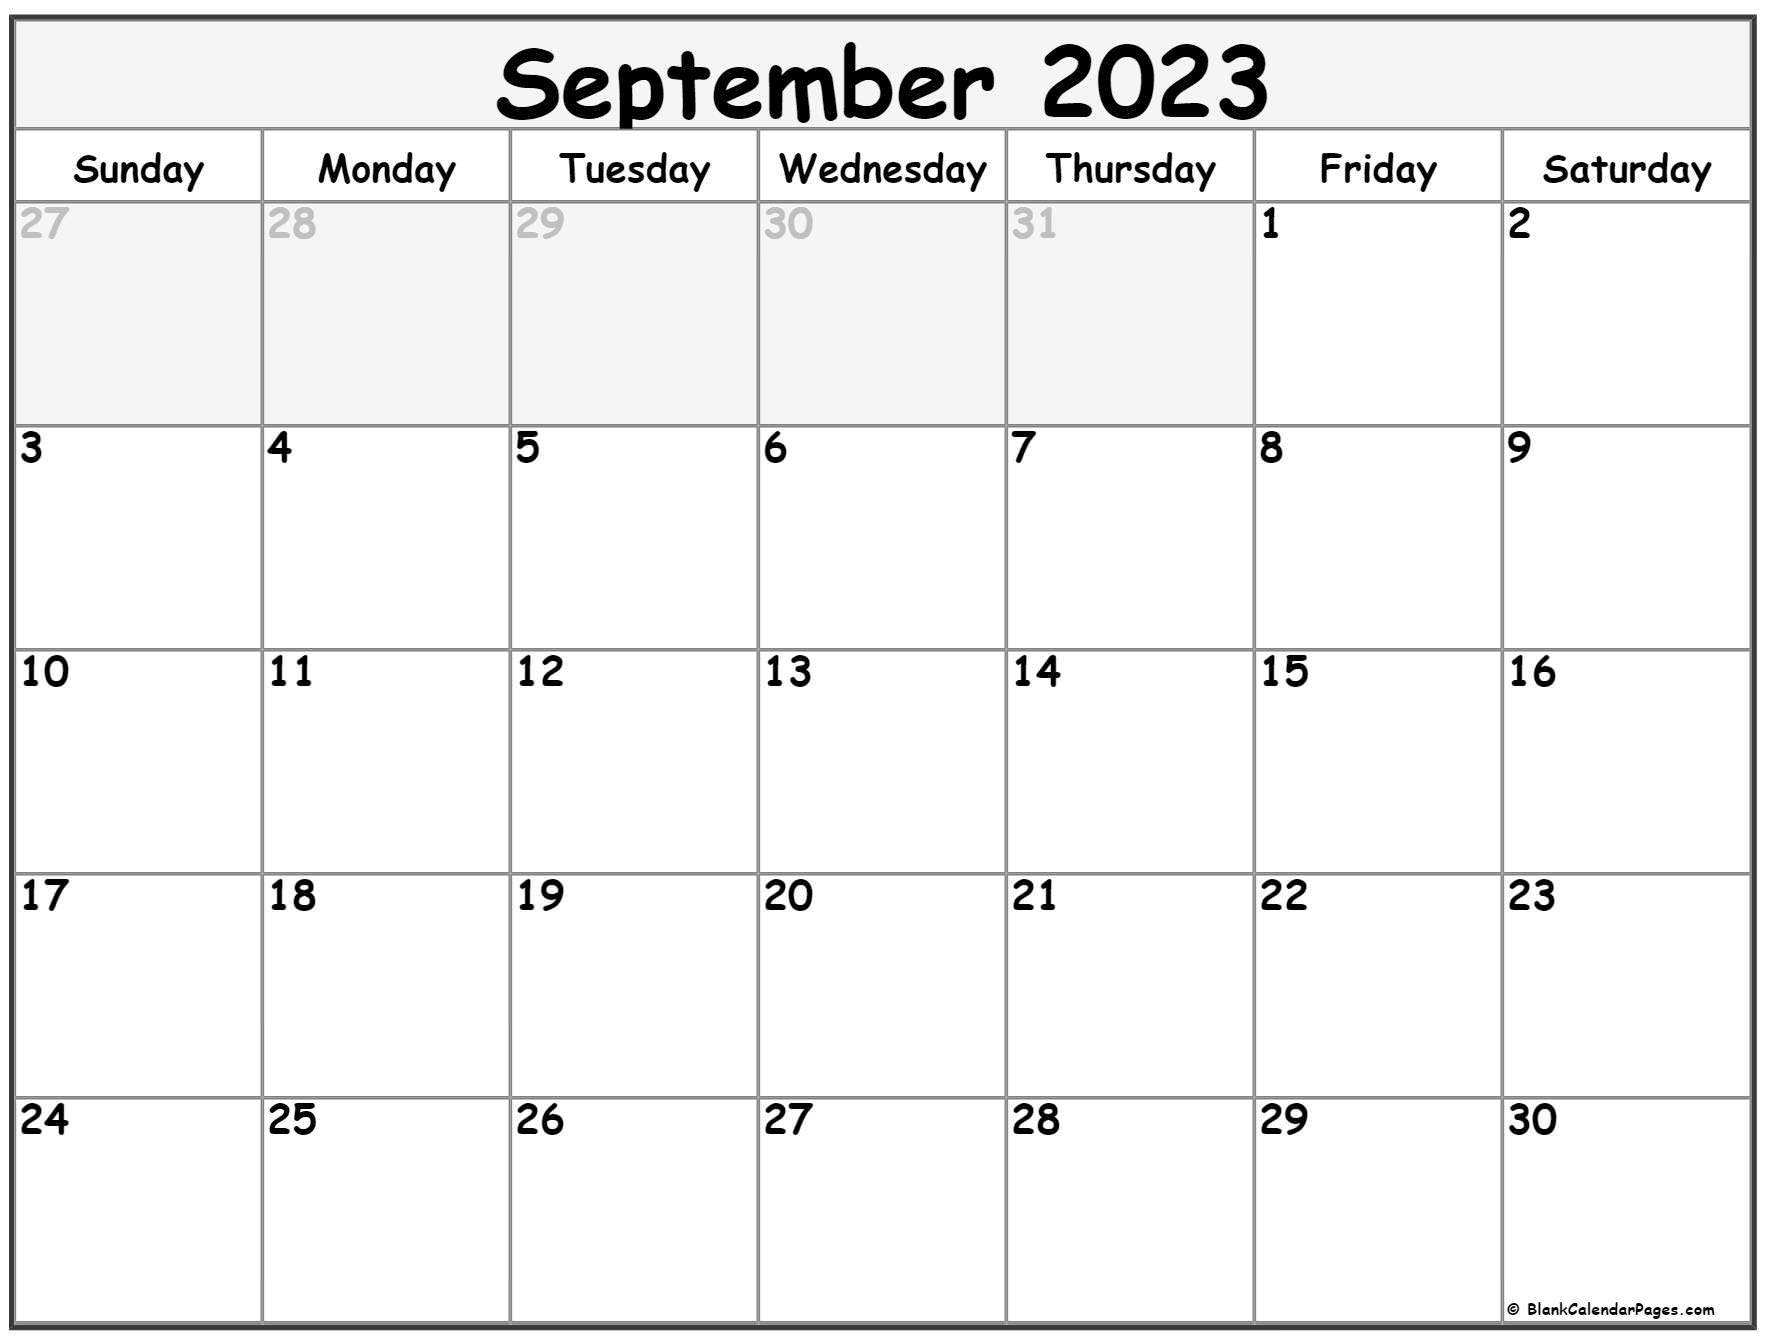 split year calendars 2022 2023 july to june pdf templates - split year